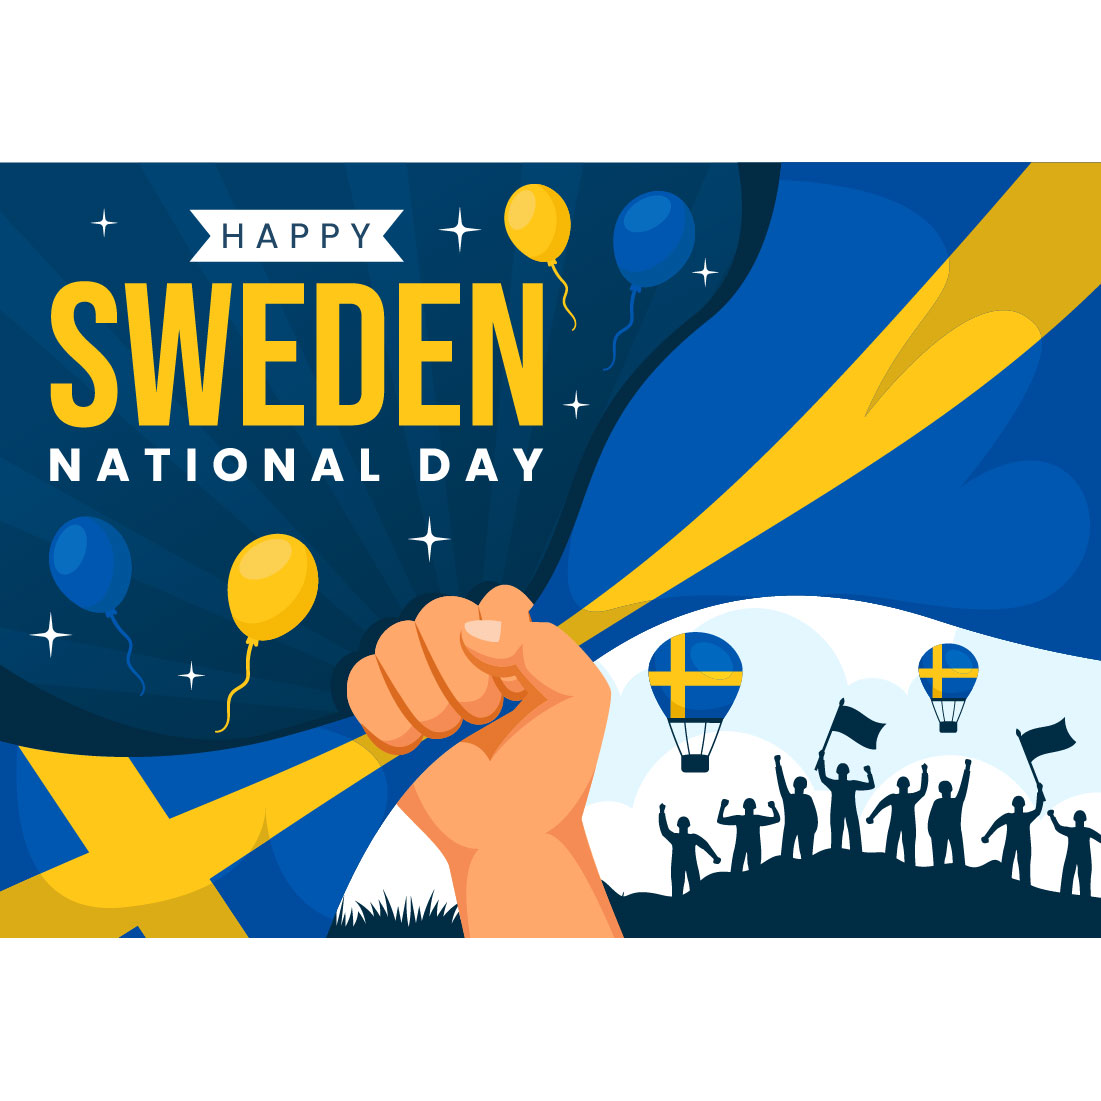 12 Sweden National Day Illustration preview image.